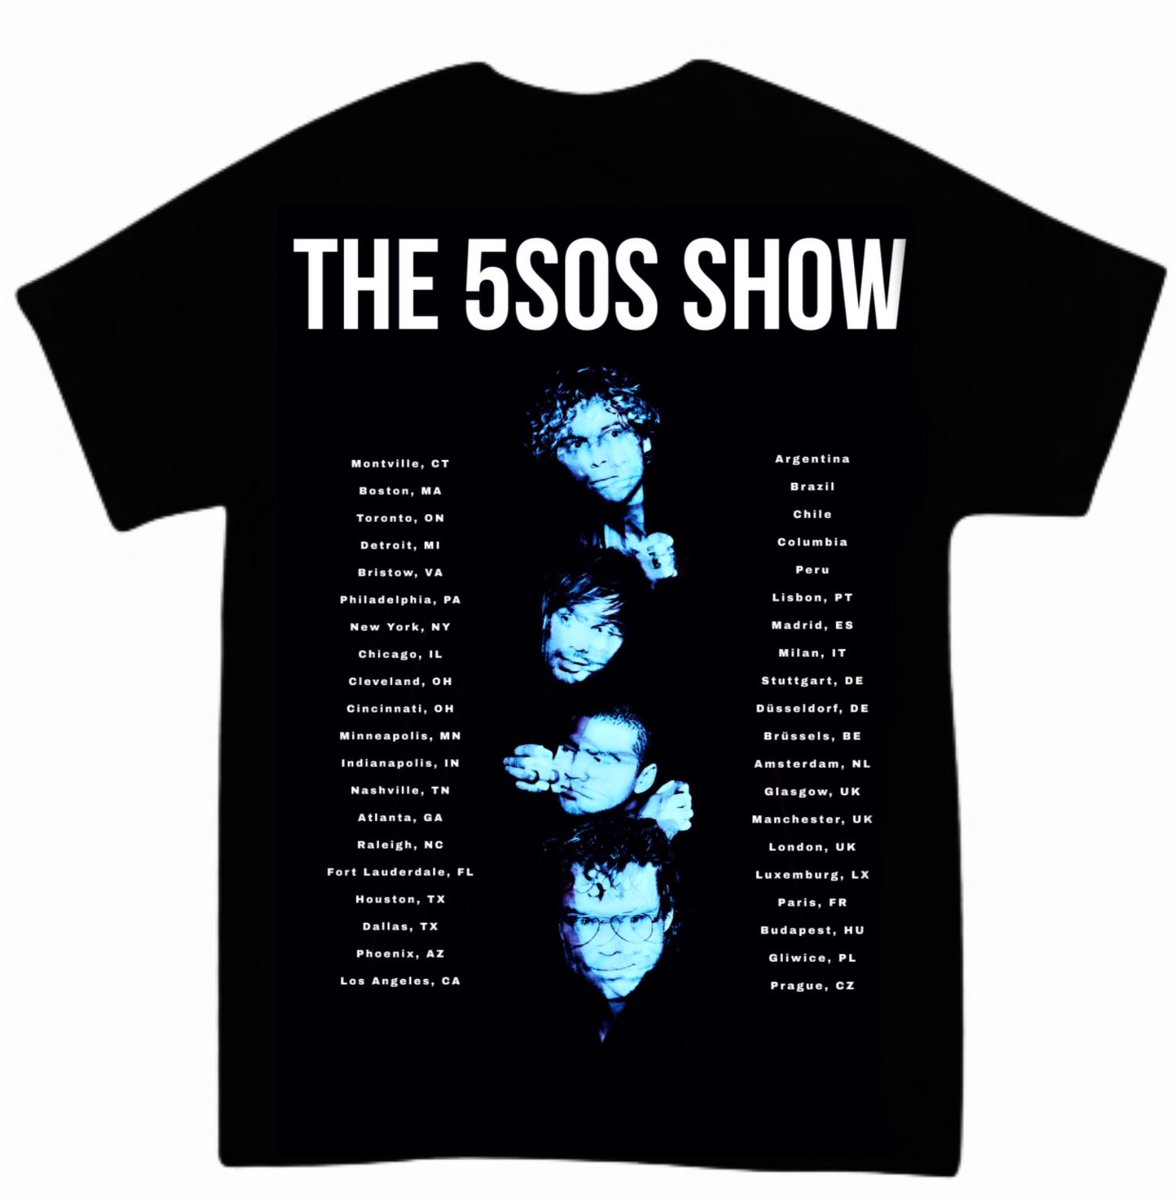 The 5SOS Show Concept Tour T-Shirt! 

#5SOS #The5SOSShow #5SecondsofSummer @5SOS